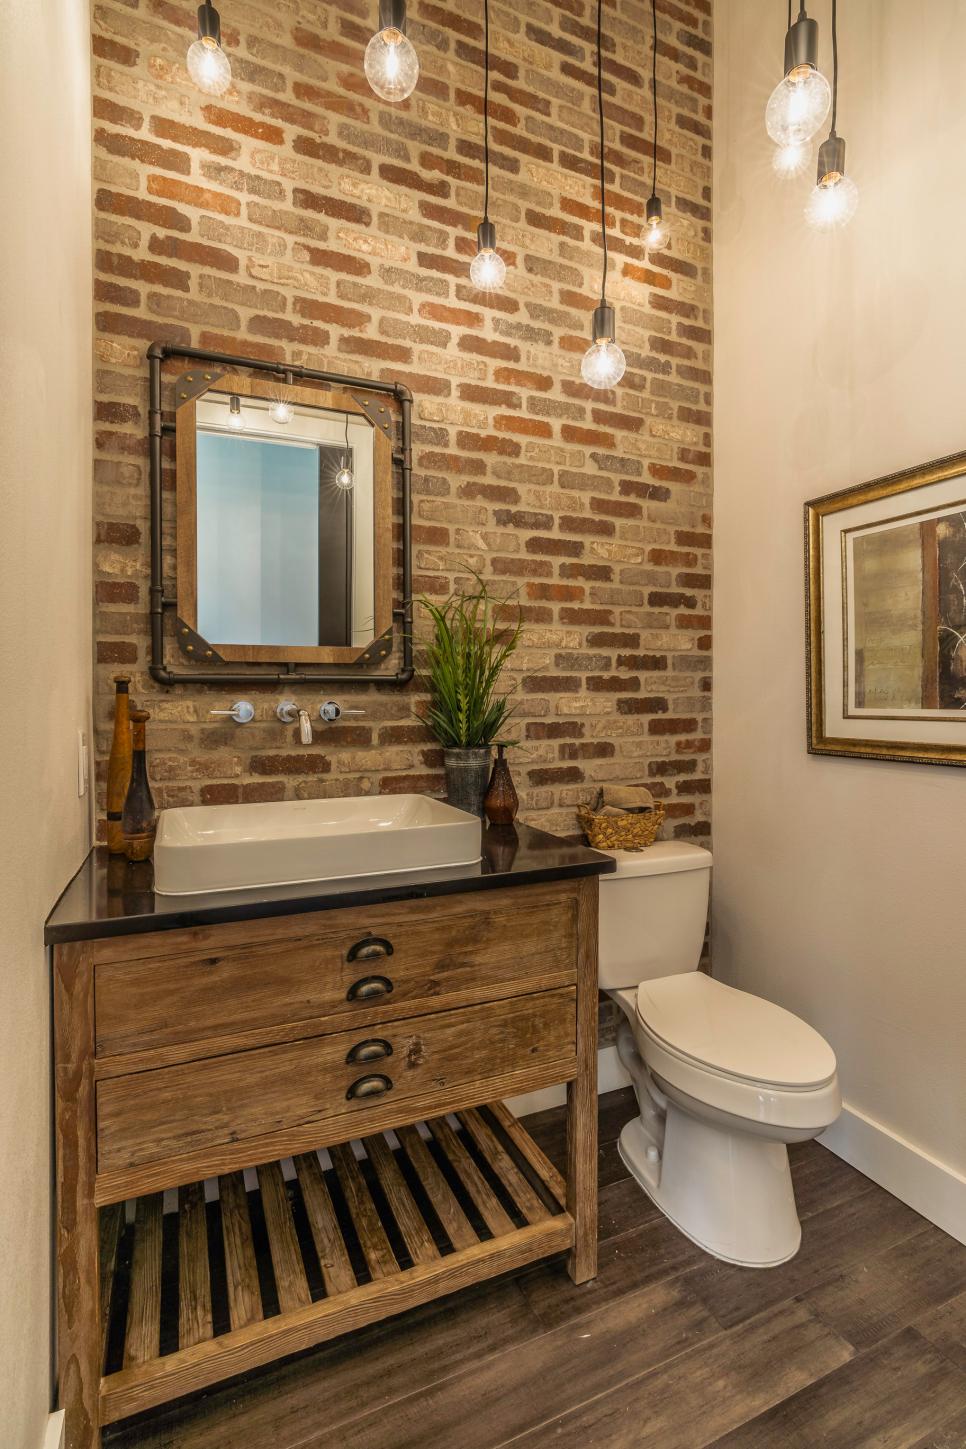 Modern Bathroom with Brick Wall Accent | HGTV